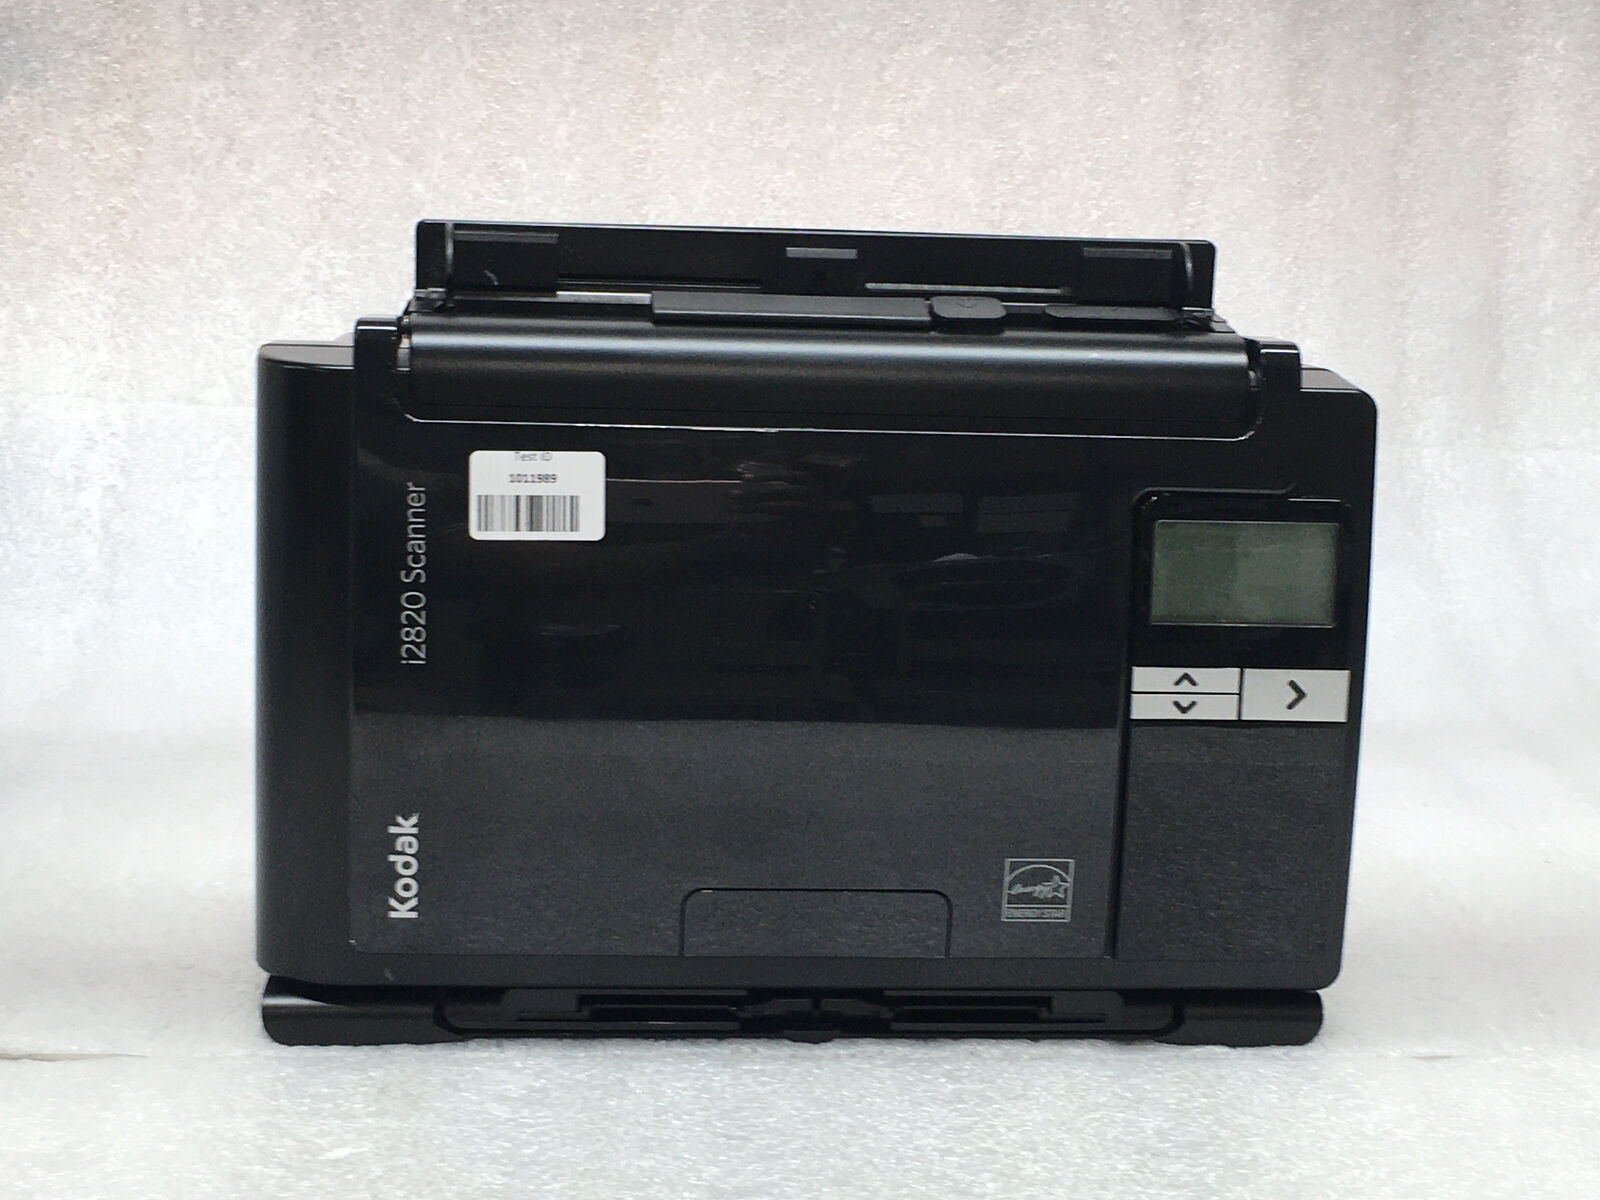 Kodak i2820 Sheet-fed Document Scanner, 300dpi - No Power Adapter, TESTED